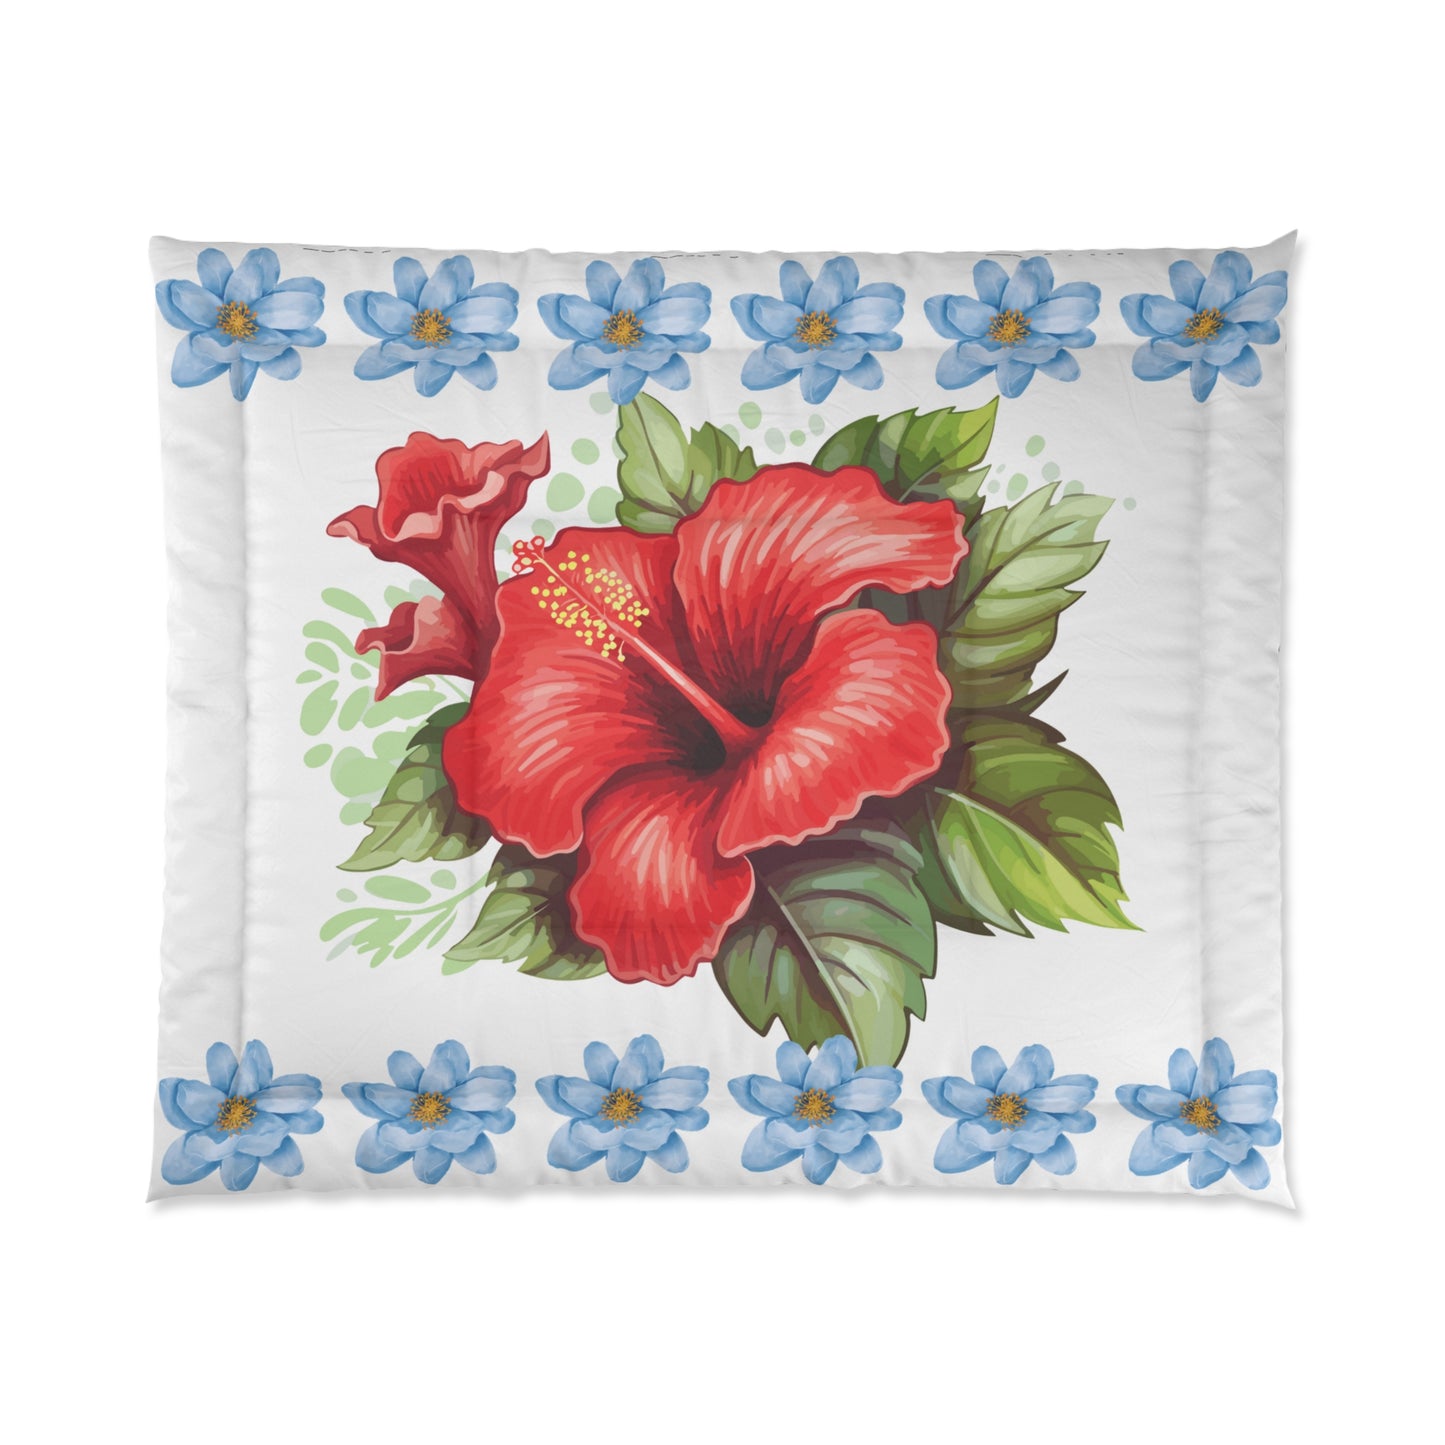 The Ultimate Comfort Doona Blanket - Flower with  flower edges